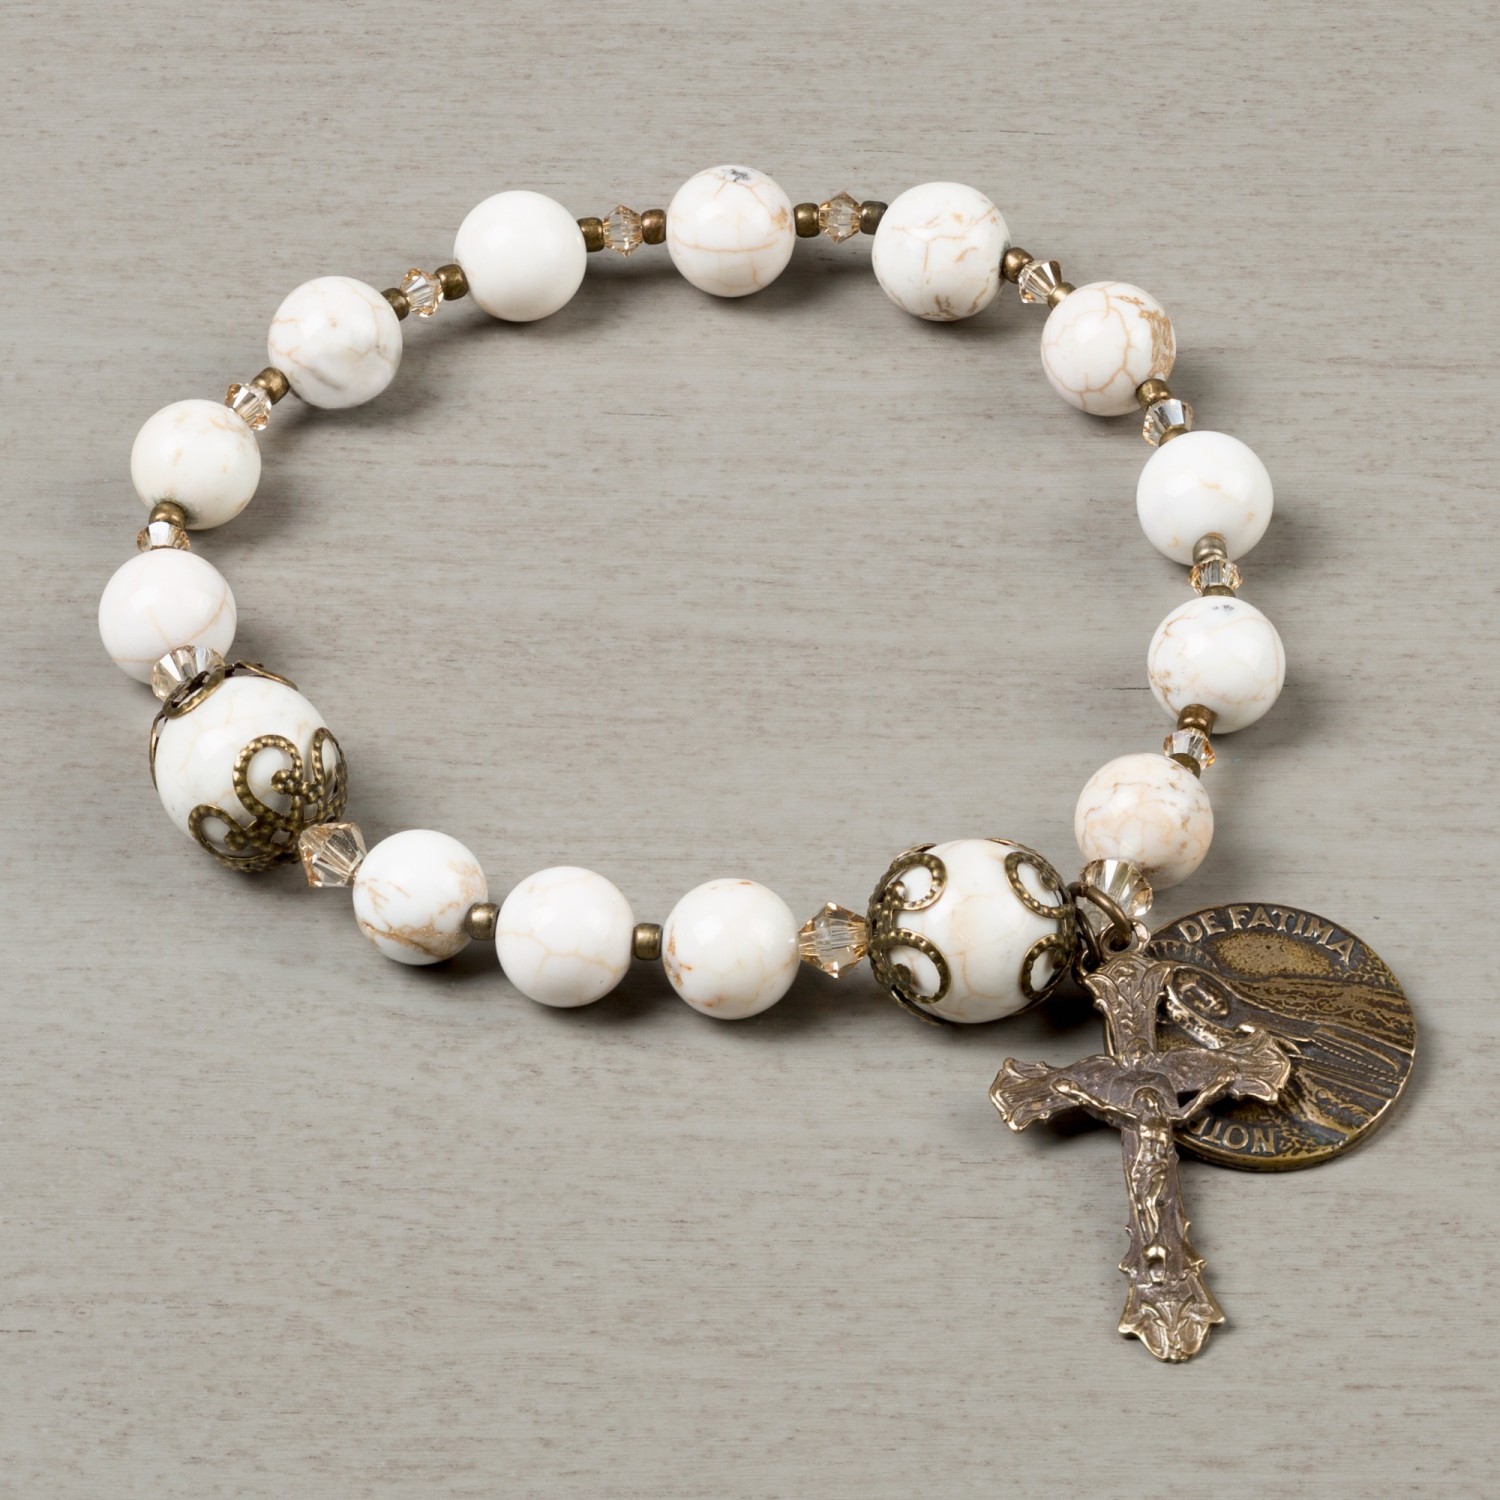 Bracelet rosary cross charm crystal